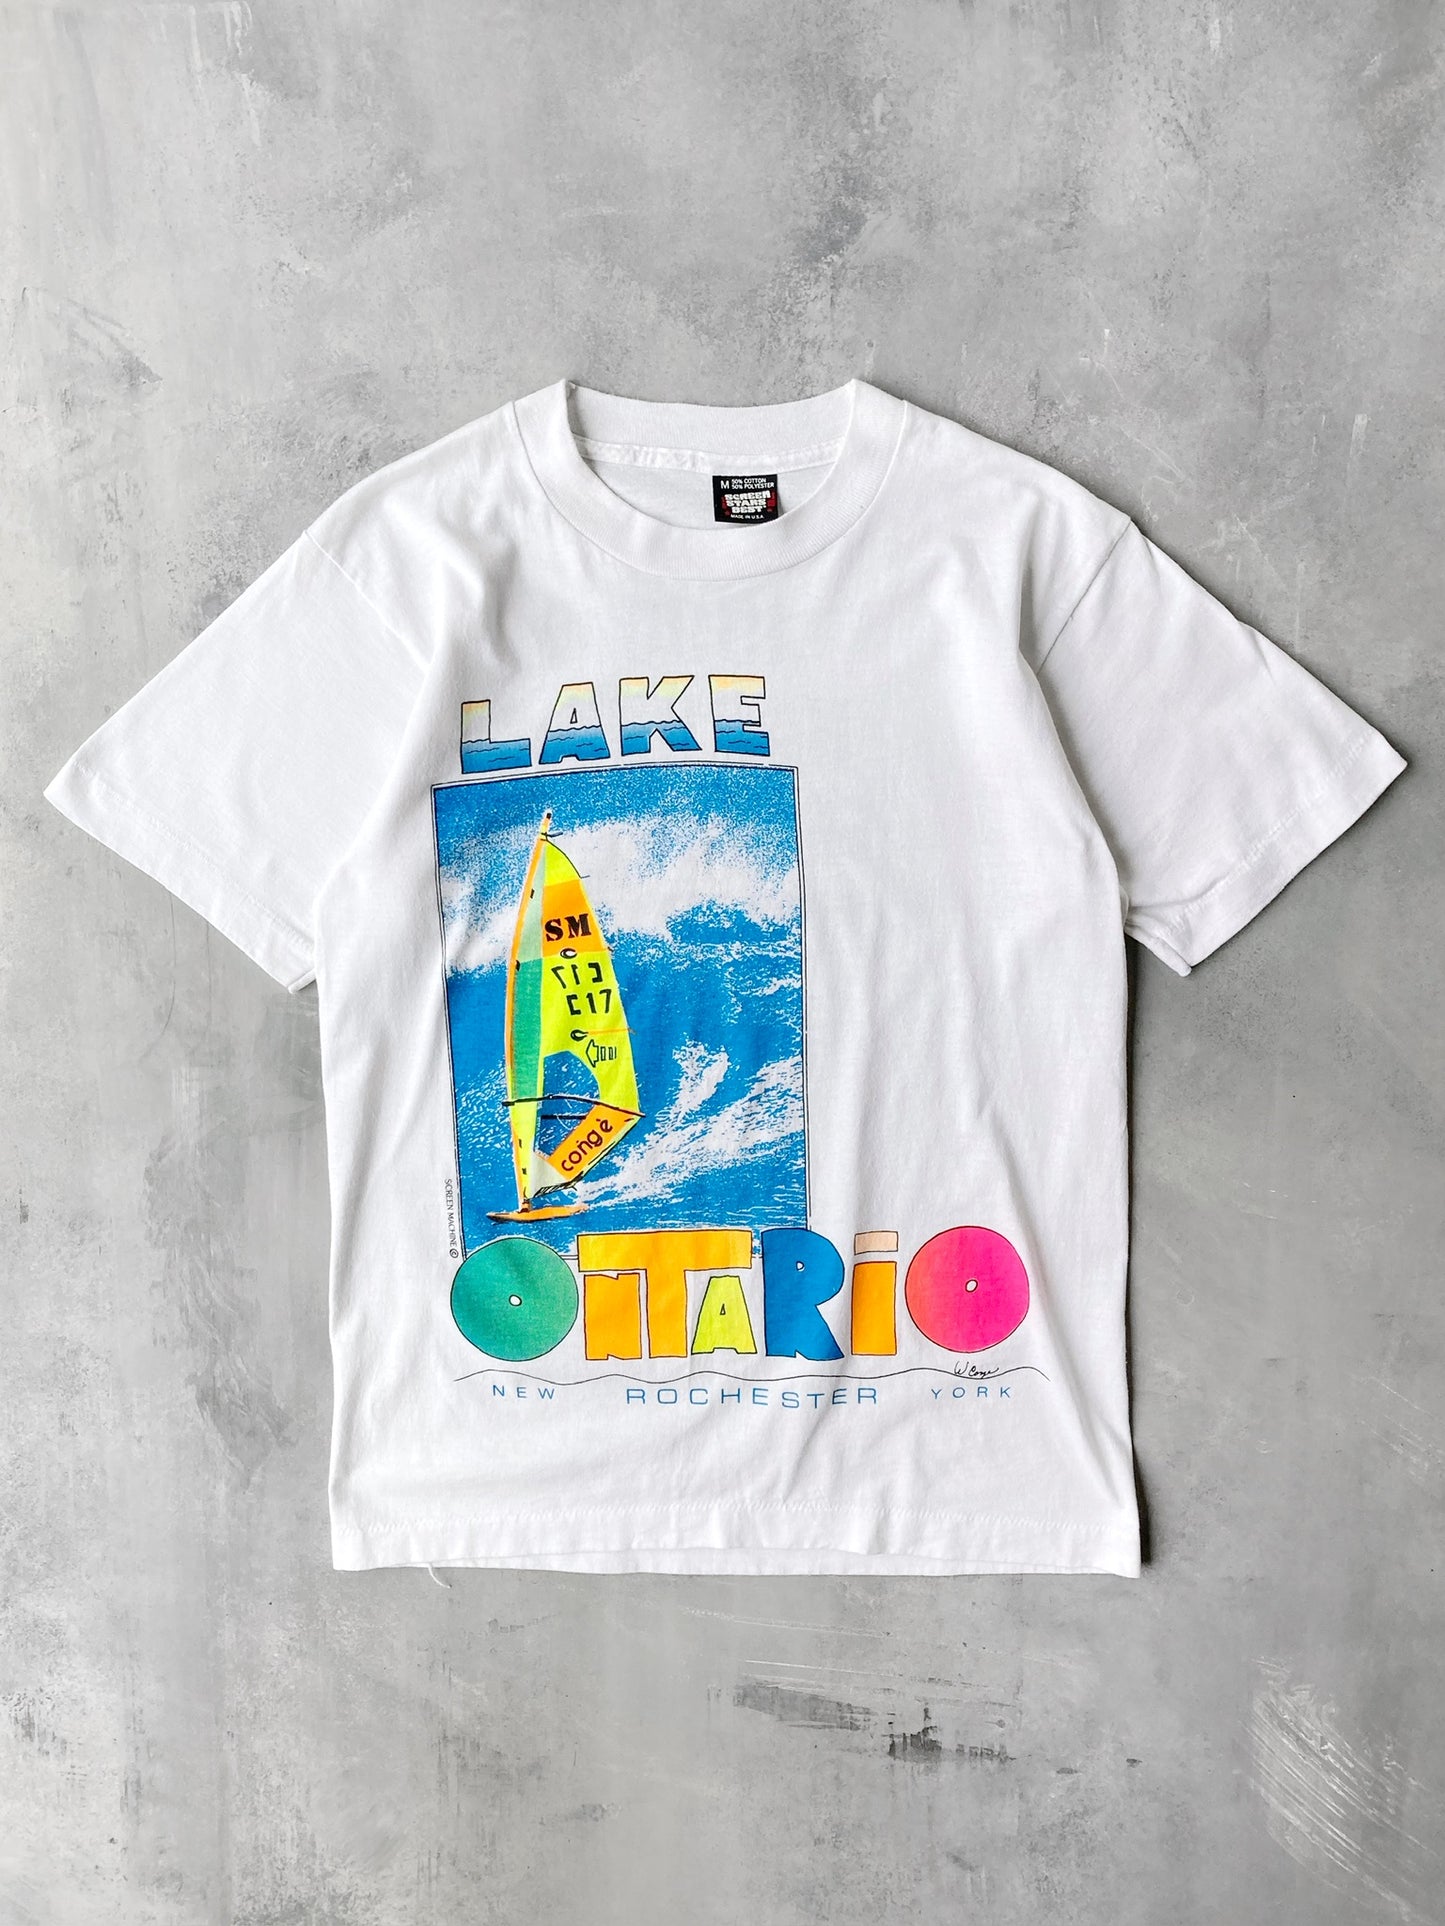 Lake Ontario Harbor Festival T-Shirt '90 - Small